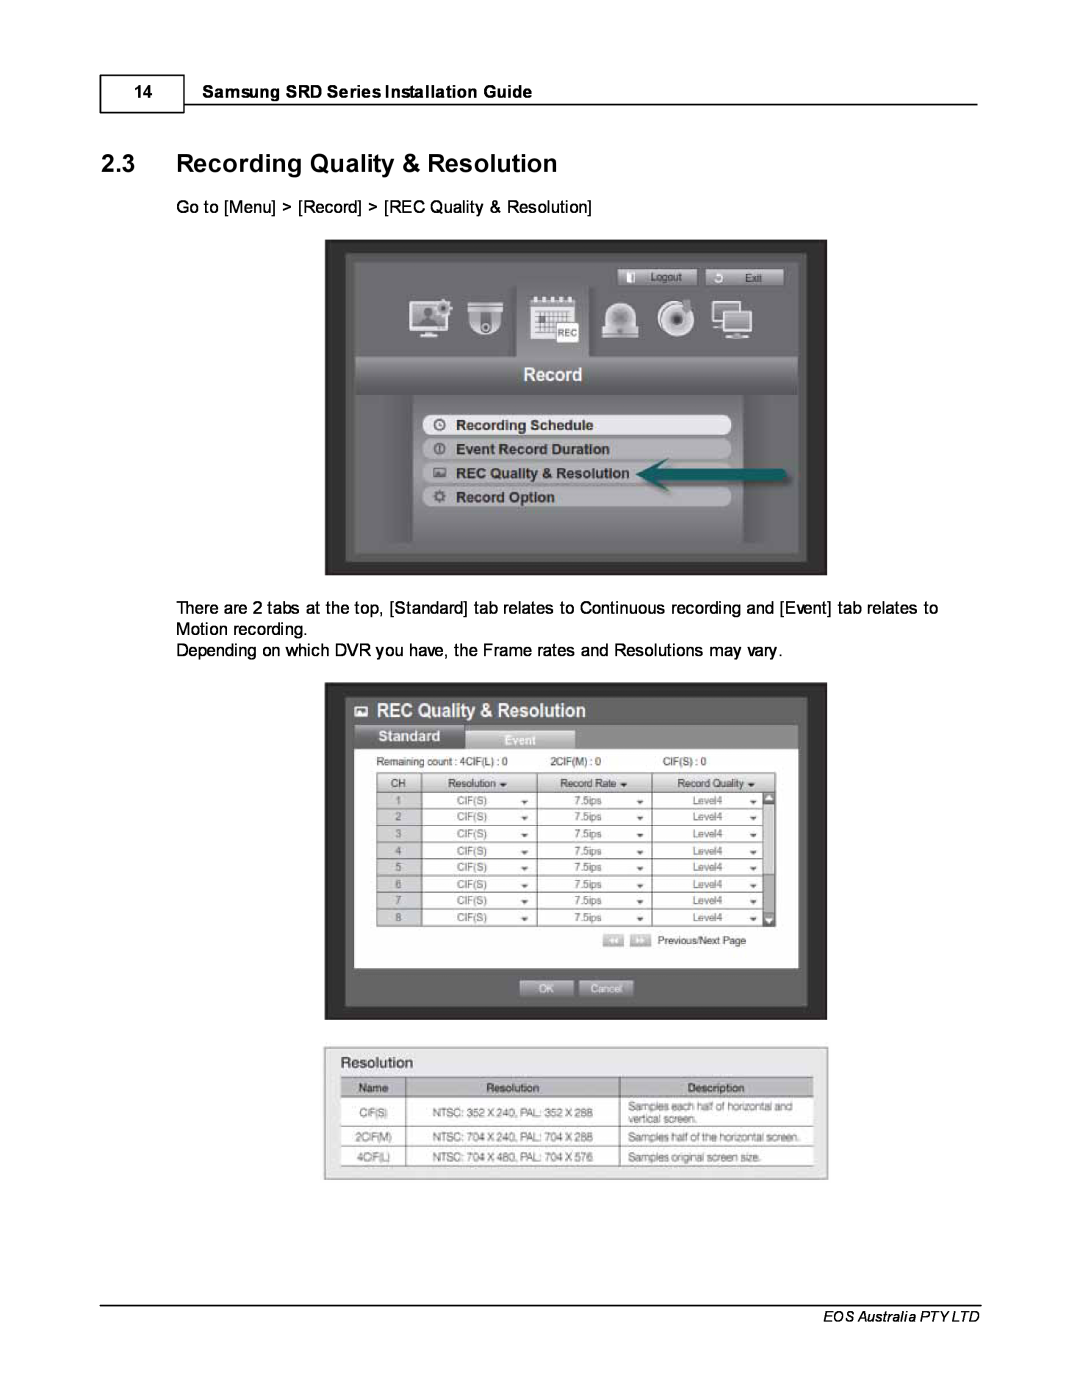 Samsung SDR4200 manual 2.3Recording Quality & Resolution, Samsung SRD Series Installation Guide 